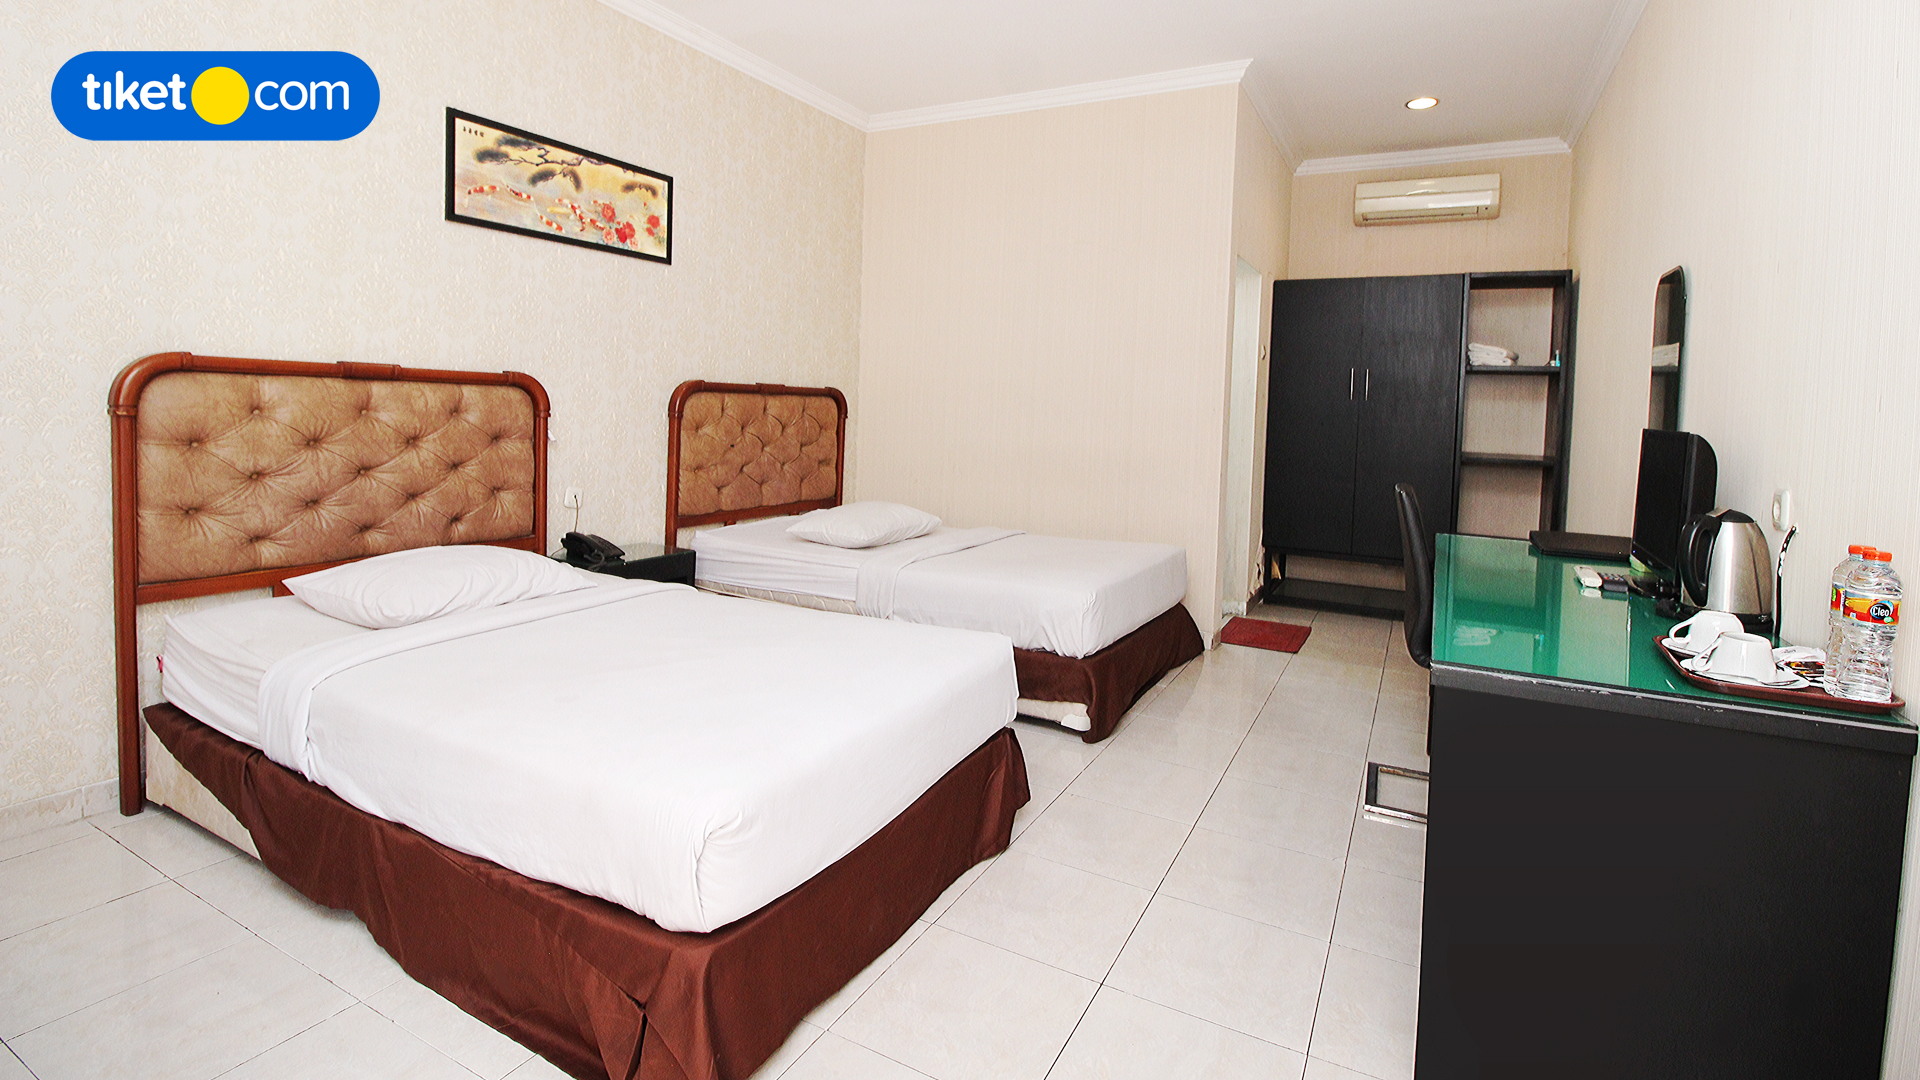 Bedroom 4, Hotel Sinar 3 Juanda, Surabaya